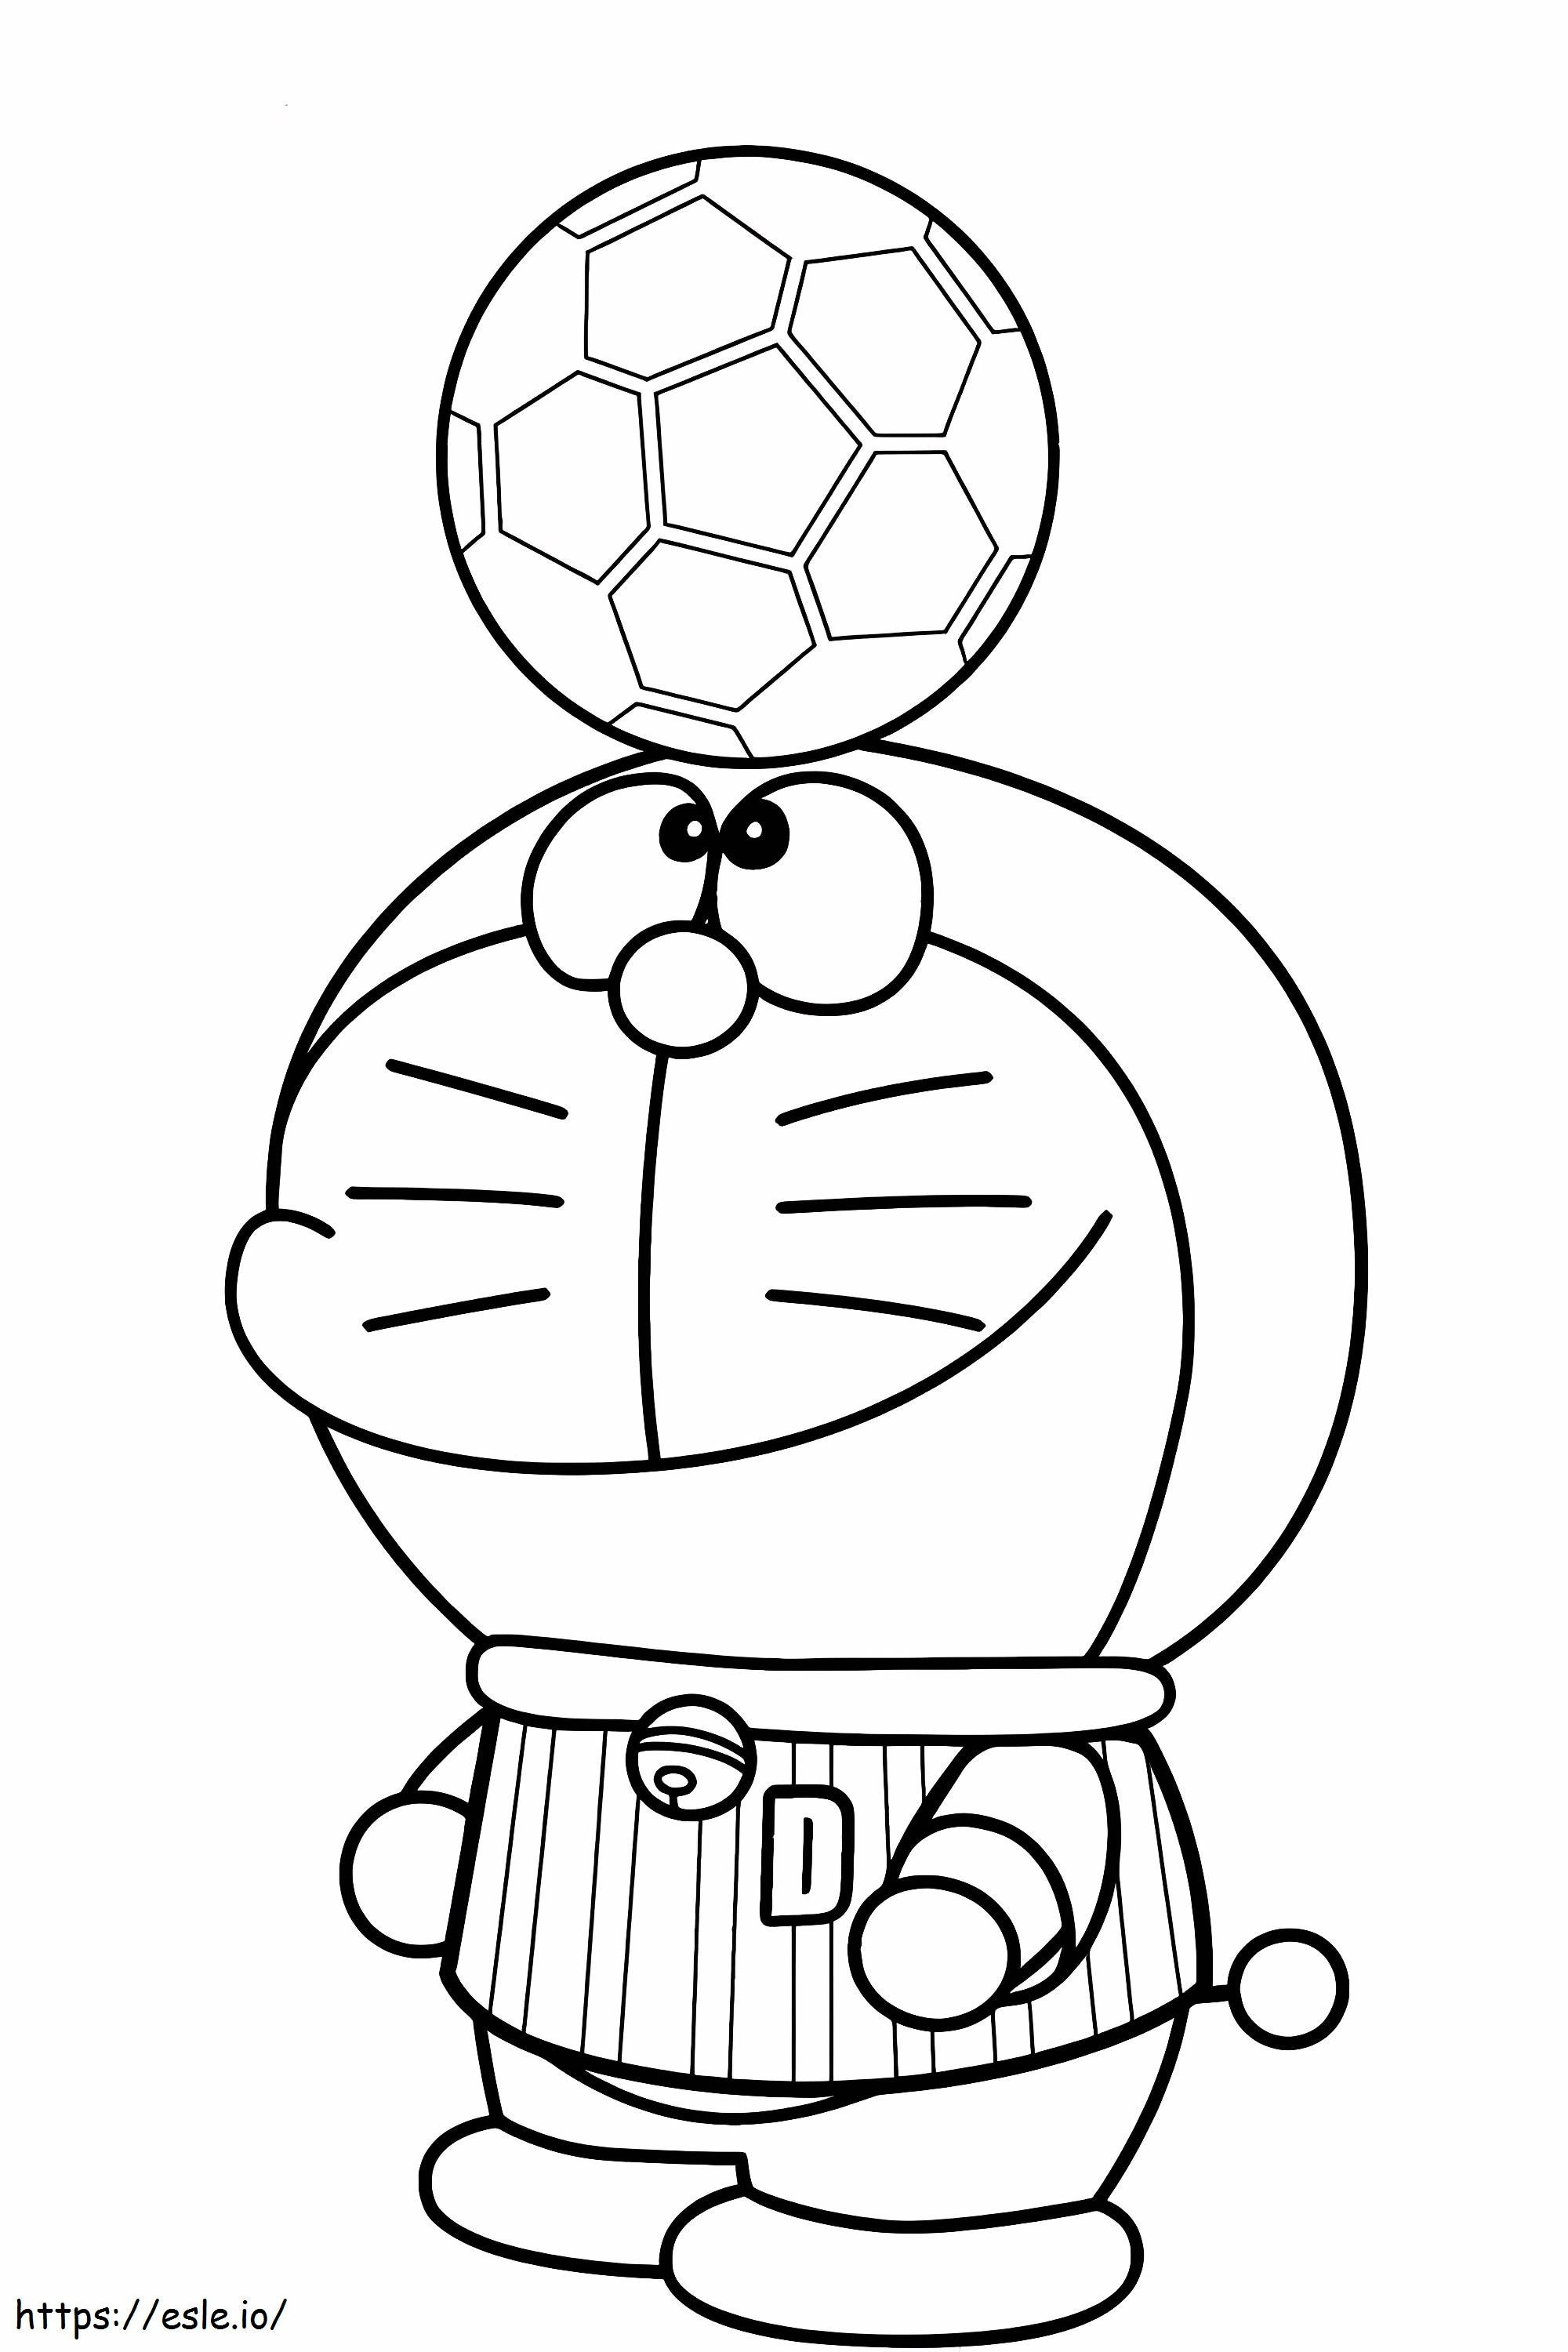 1540782584_I Love Soccer Linda Doraemon Desenhos para Colorir Linha Mágico Doraemon Of I Love Soccer para colorir